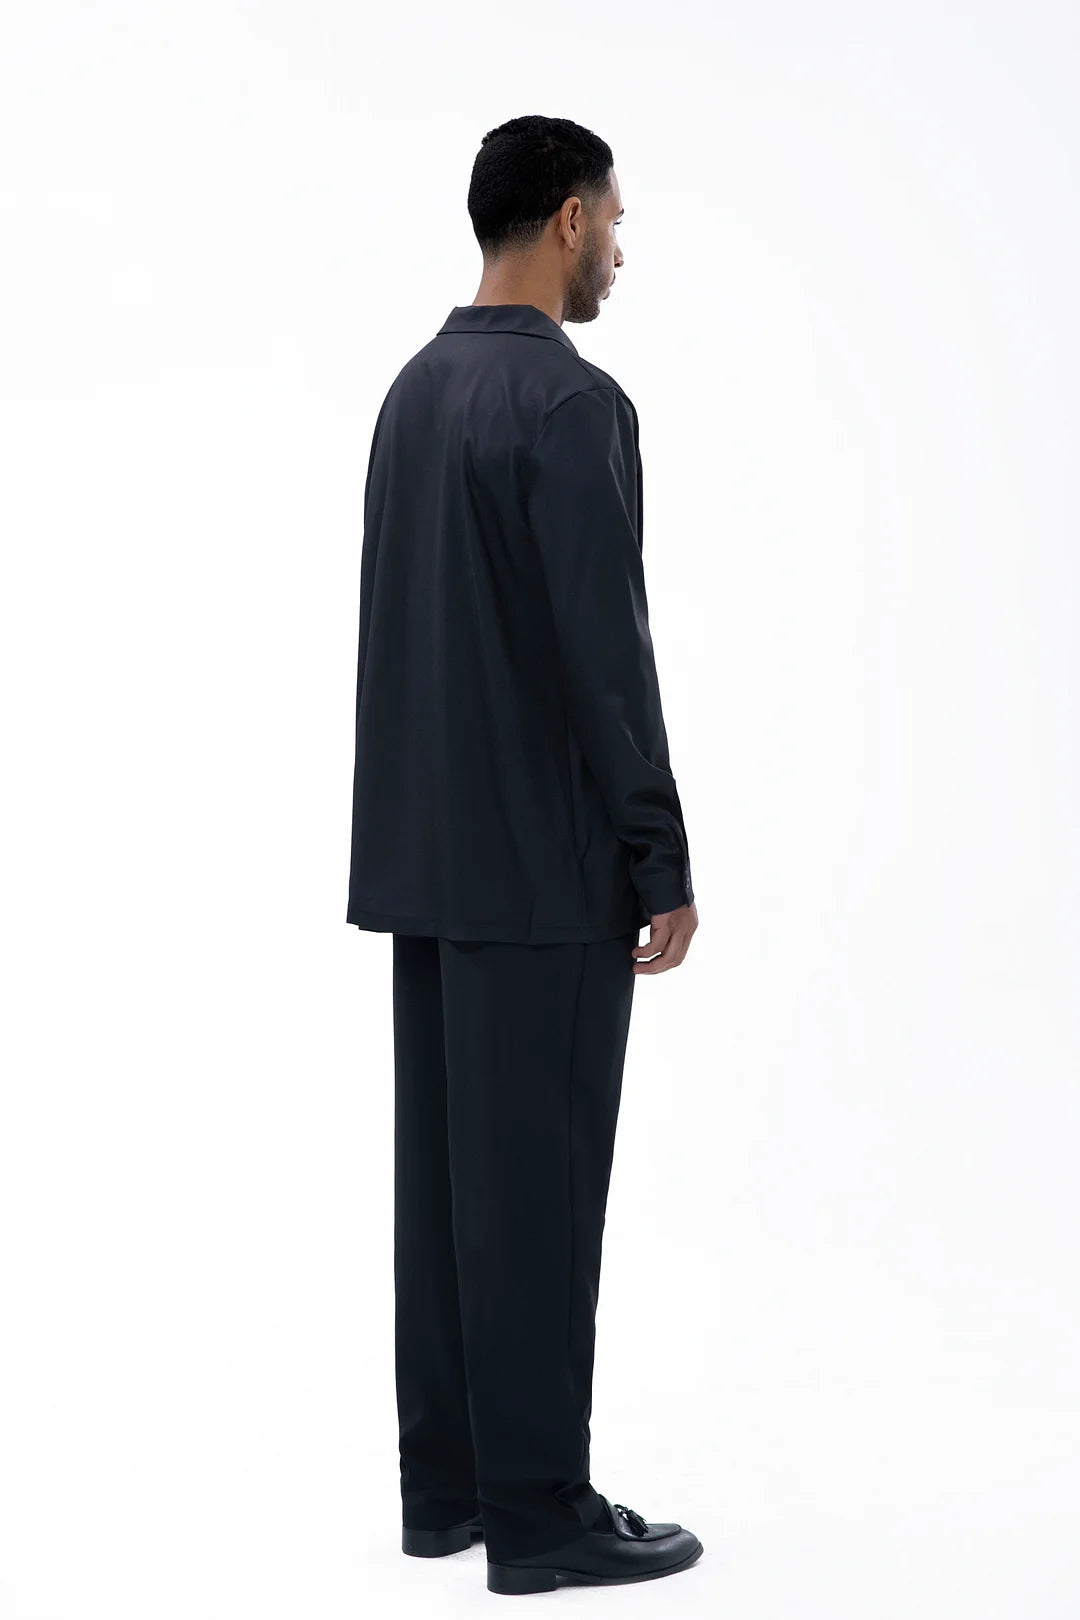 Black Walking Suit 2 Piece Long Sleeve Set